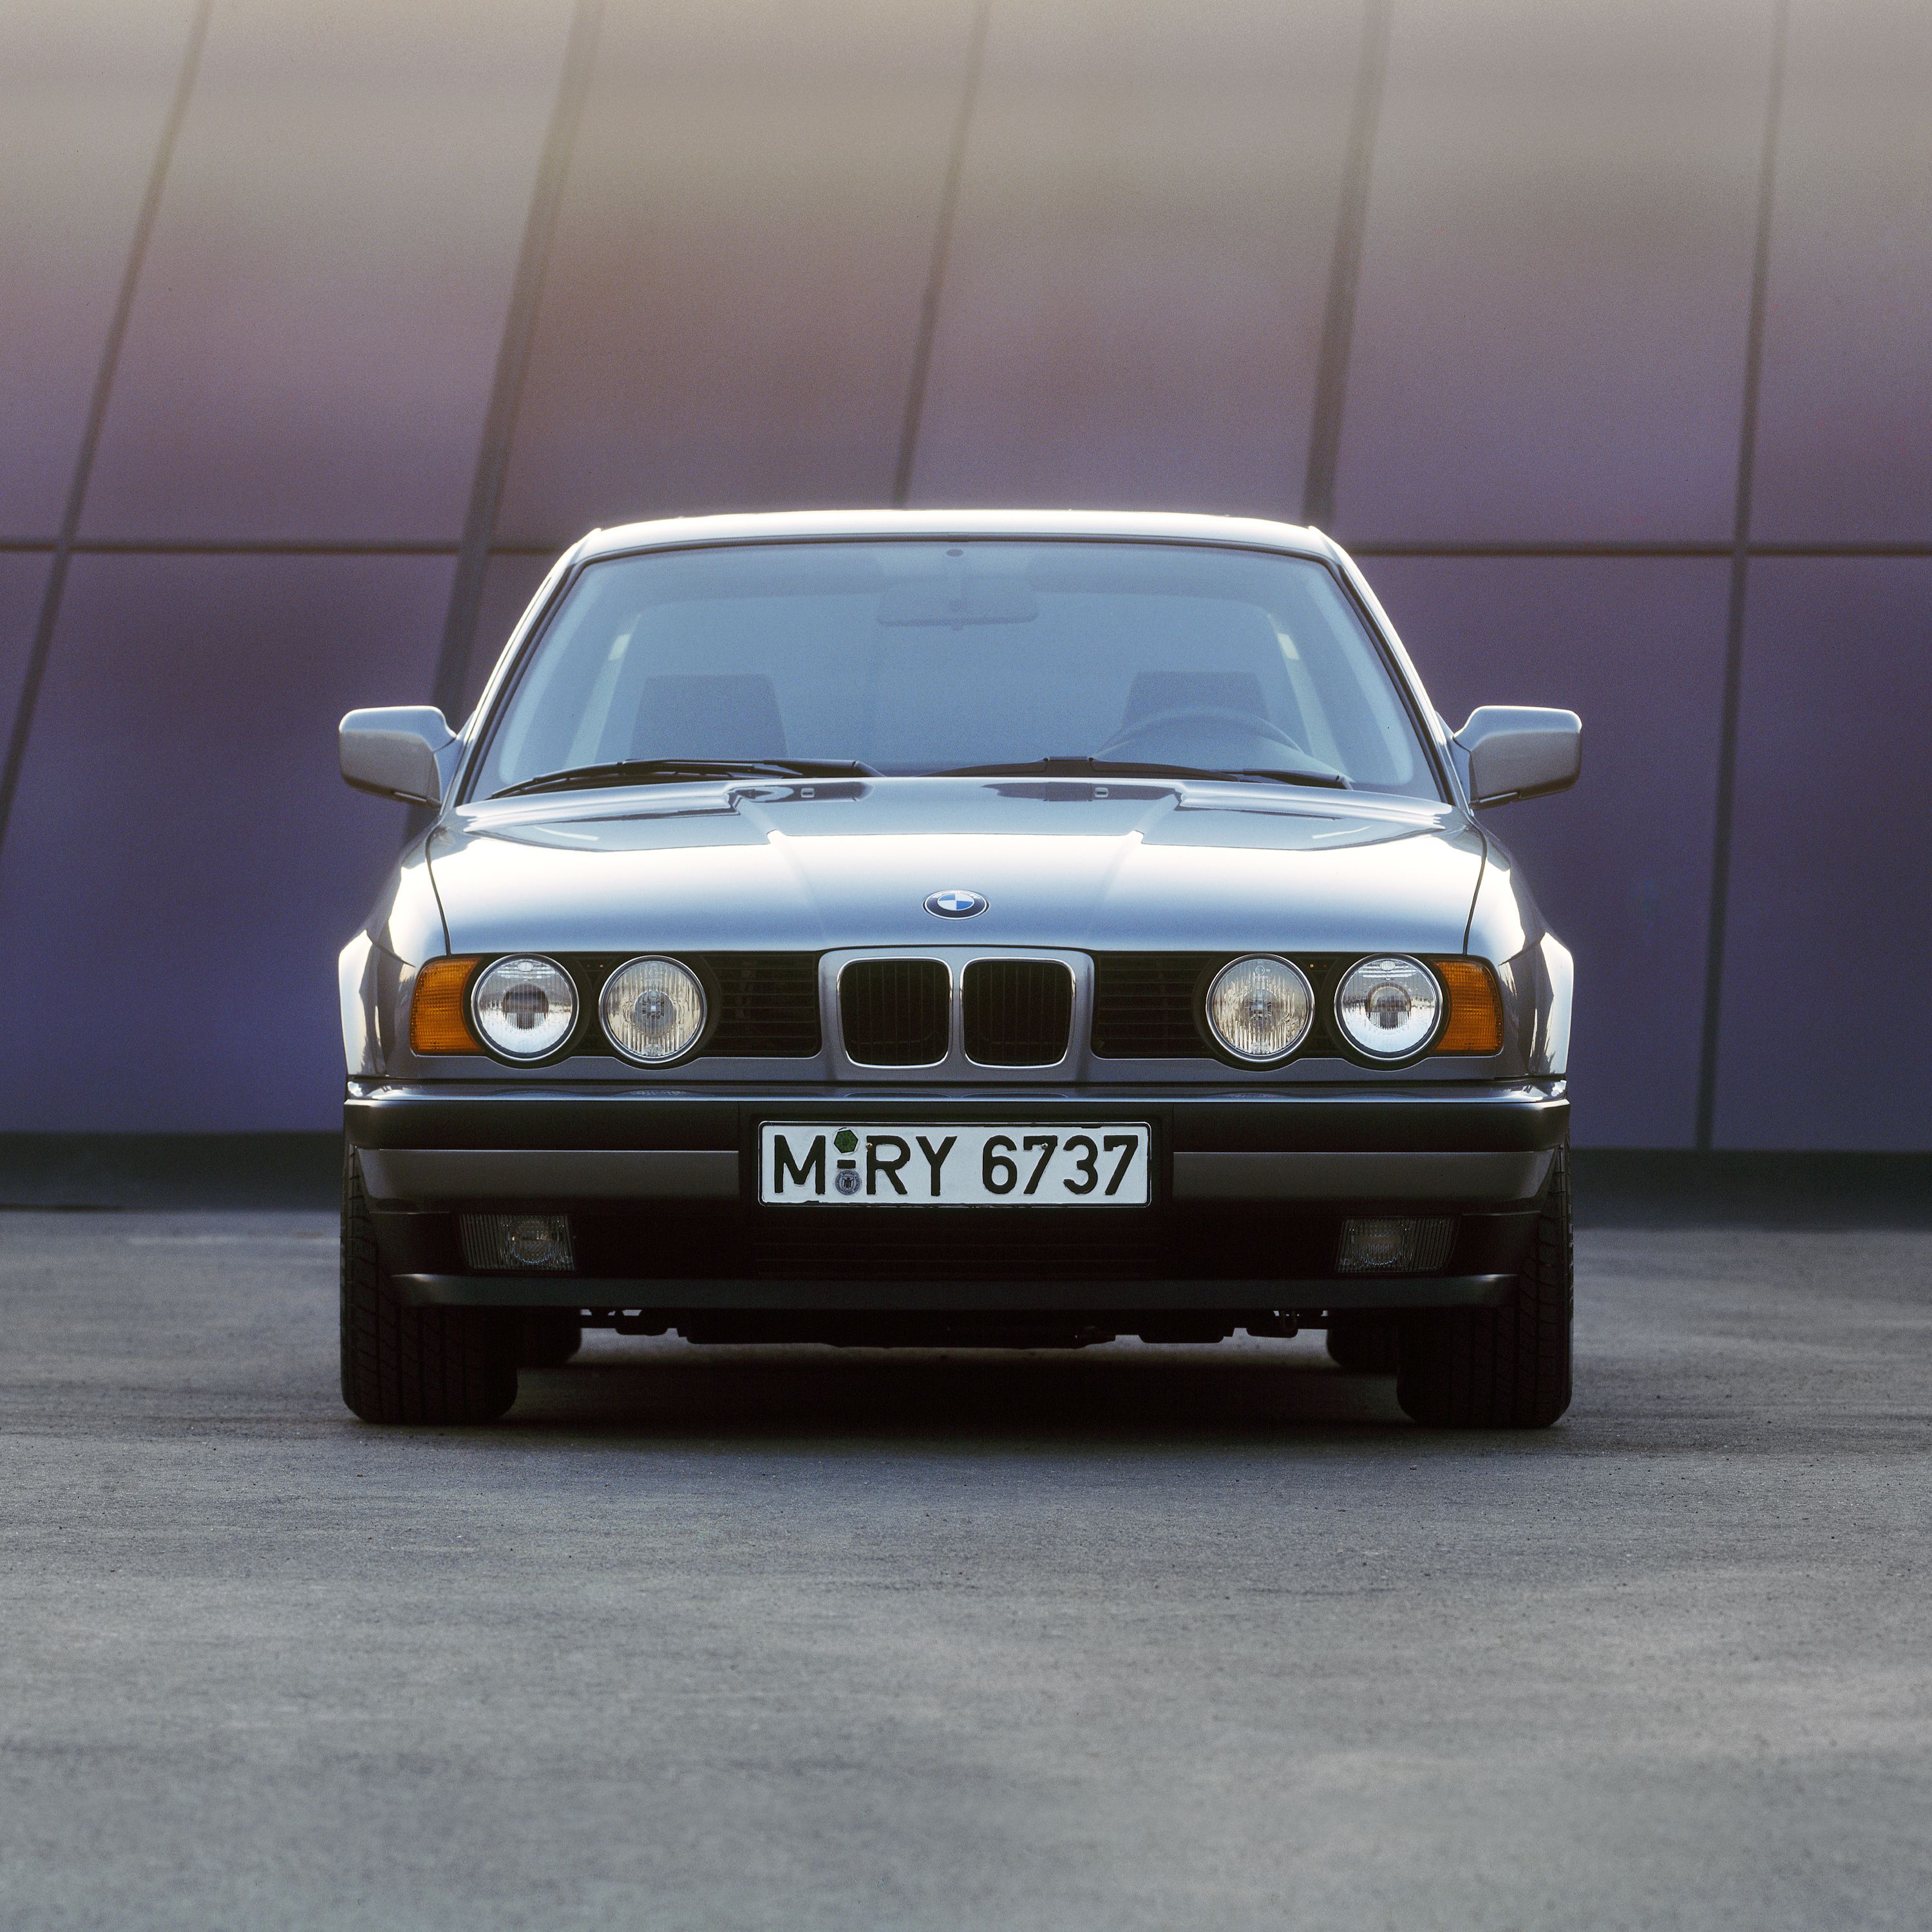 BMW M5 Sedan (E34) three-quarter frontal view while parked